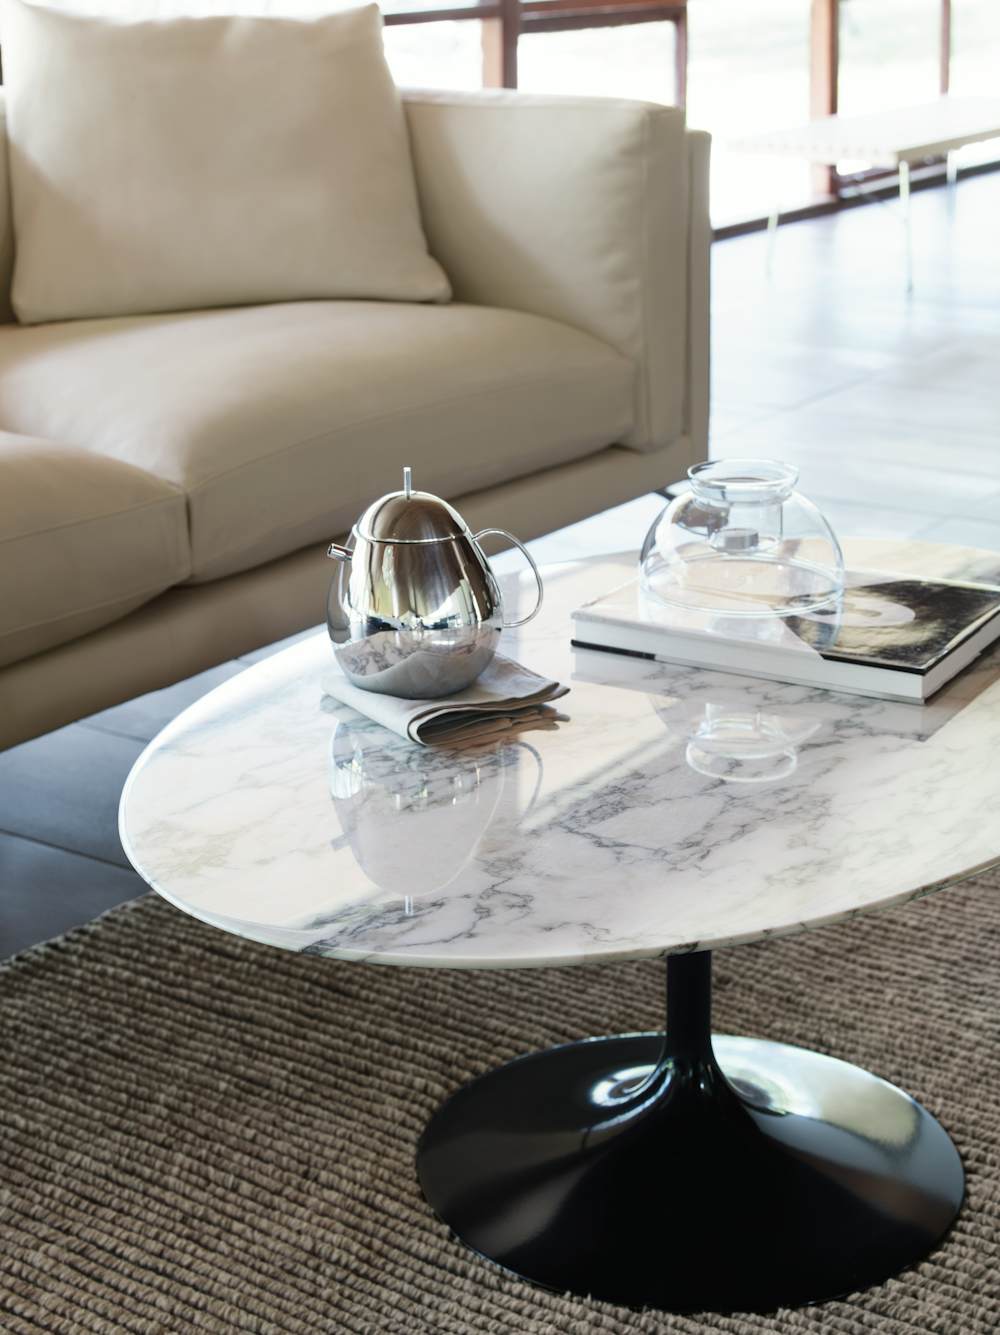 Saarinen Coffee Table in a living room setting